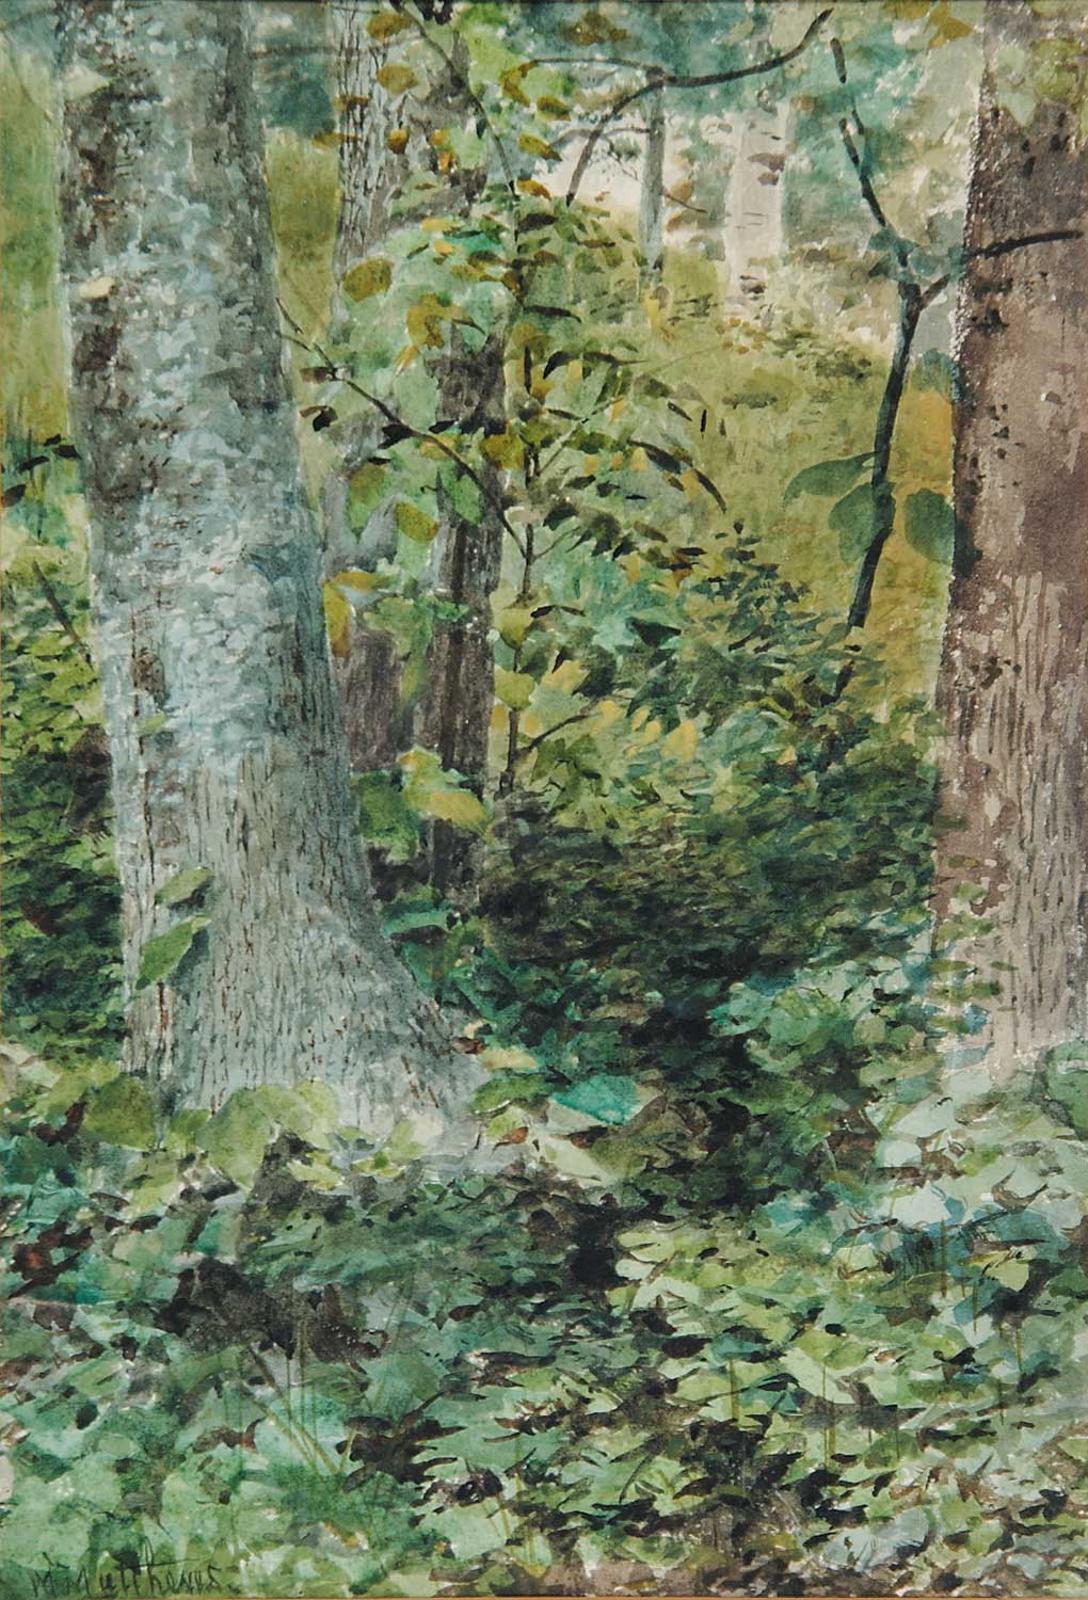 Marmaduke Matthews (1837-1913) - Untitled - Forest Undergrowth